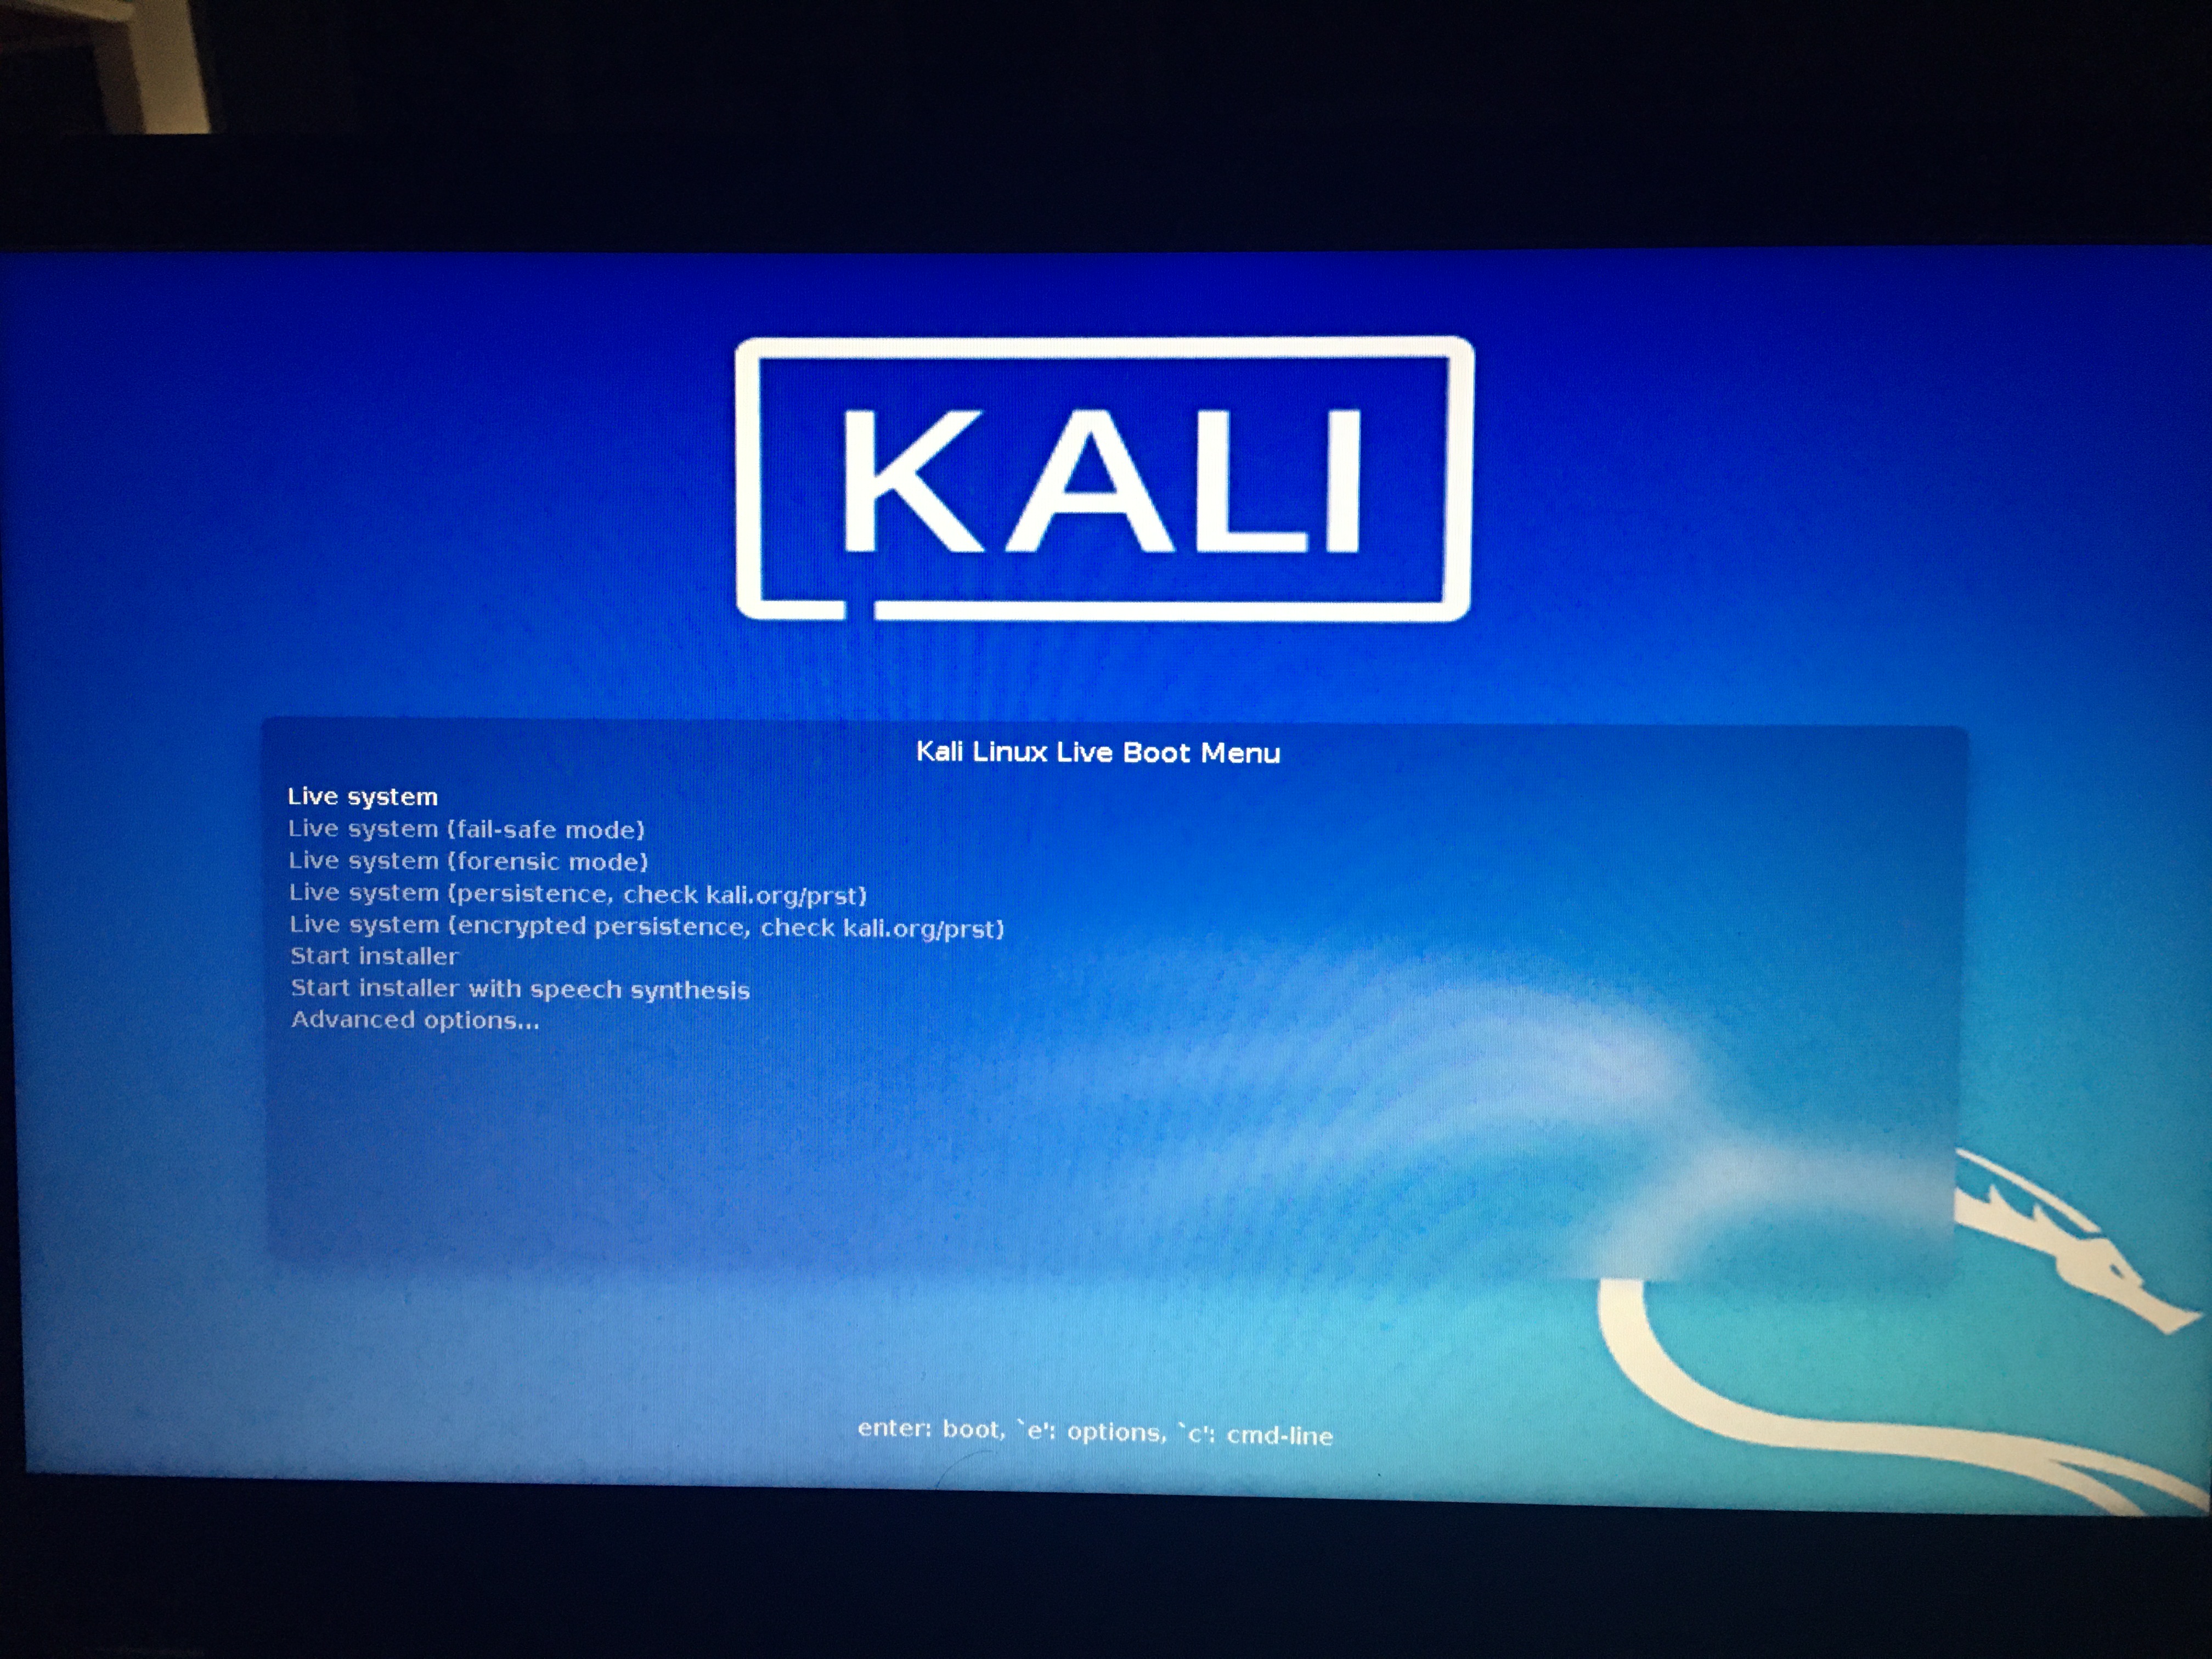 narre Kanin sagde Kali 2020.3 Live USB with persistence: stuck on Live Boot Menu | Linux.org